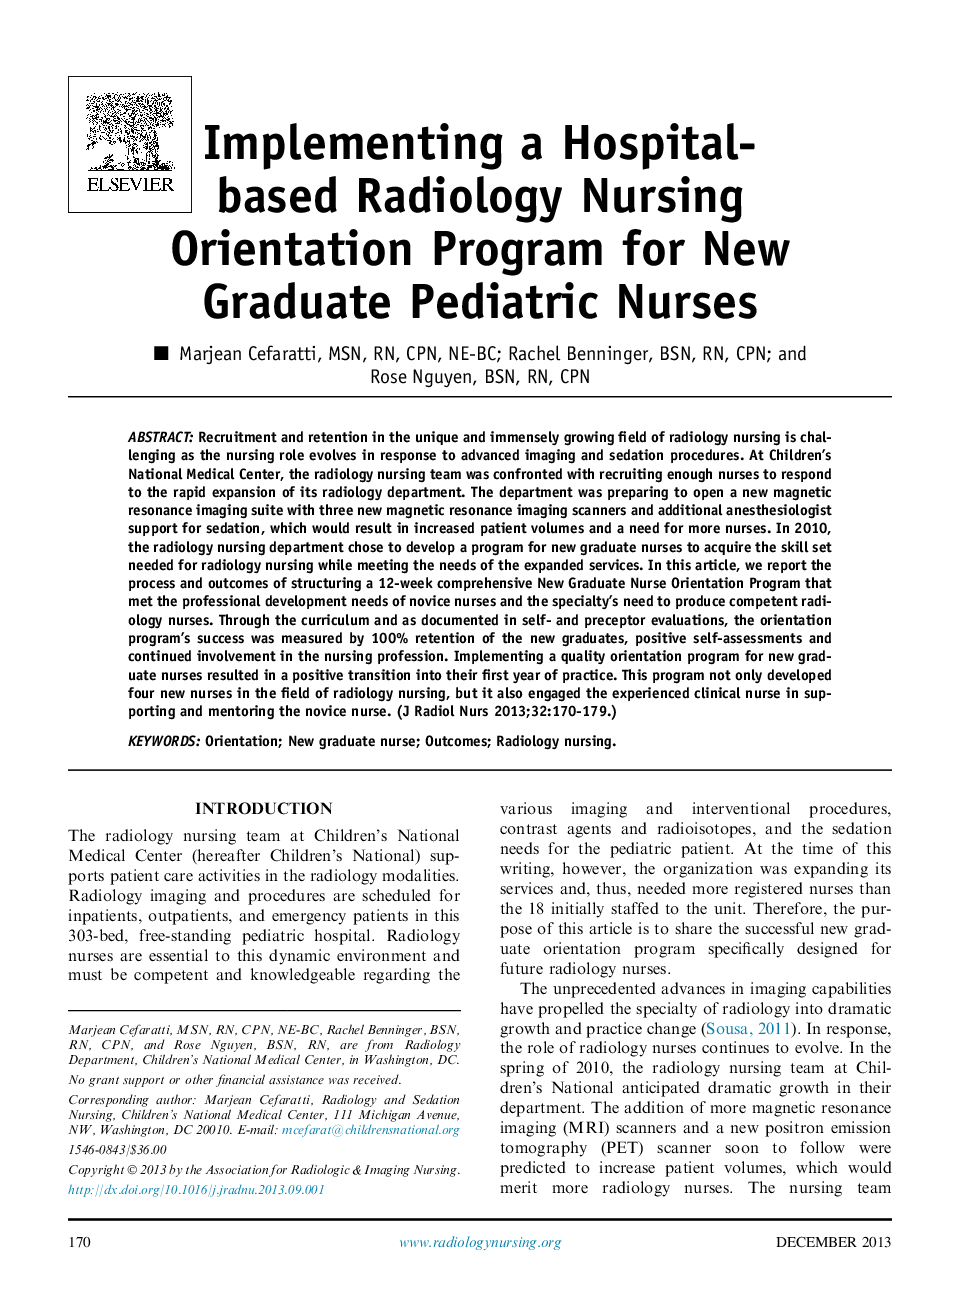 Implementing a Hospital-based Radiology Nursing Orientation Program for New Graduate Pediatric Nurses 